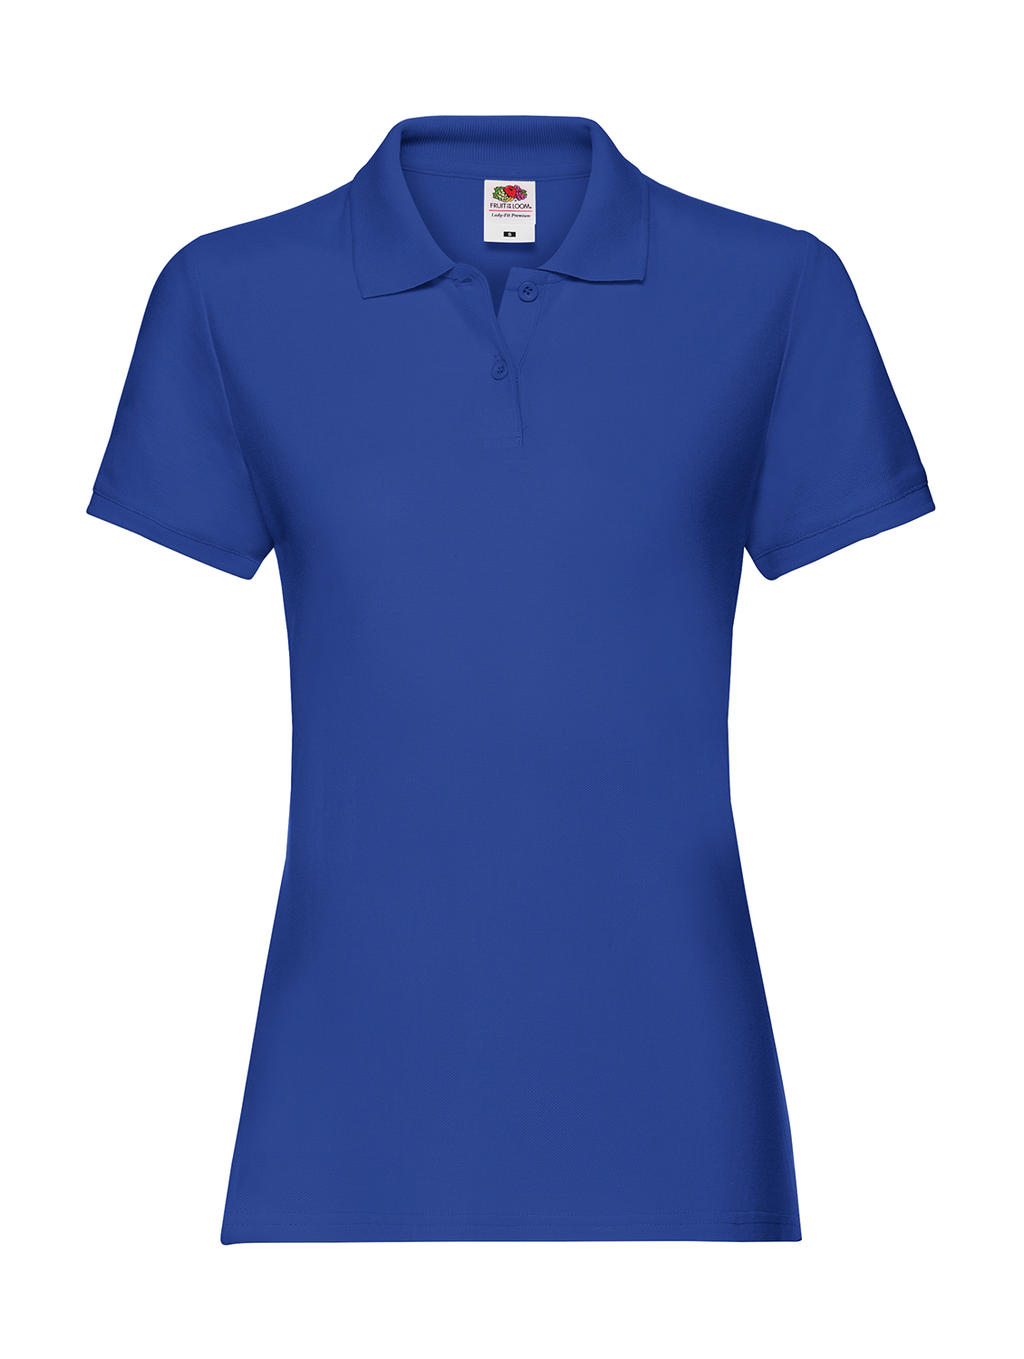  Ladies Premium Polo in Farbe Royal Blue